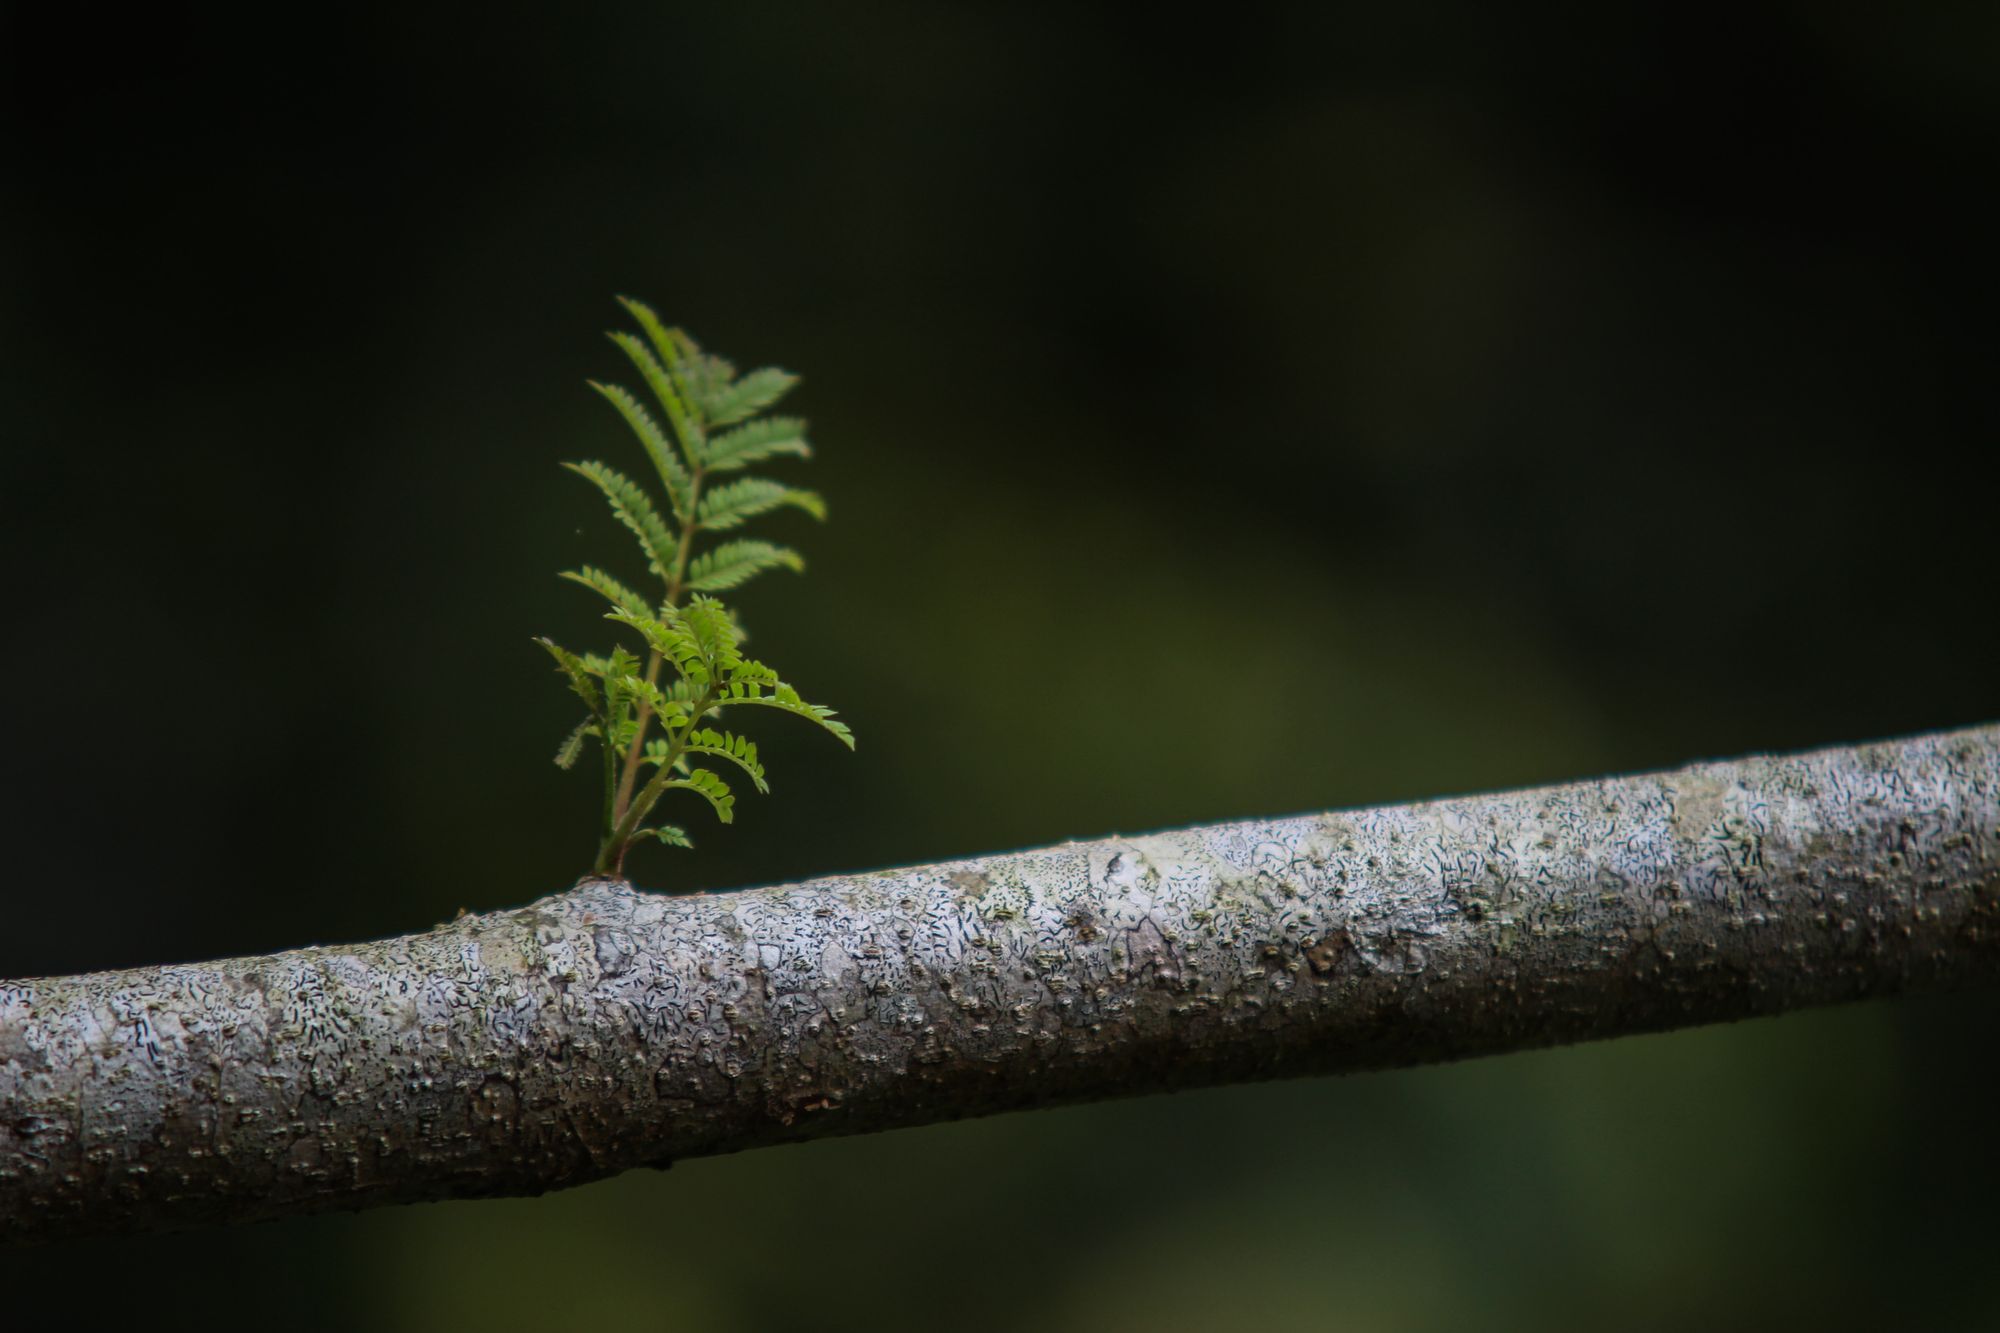 A small fern growing on a grey tree bark against a blurred dark green background.